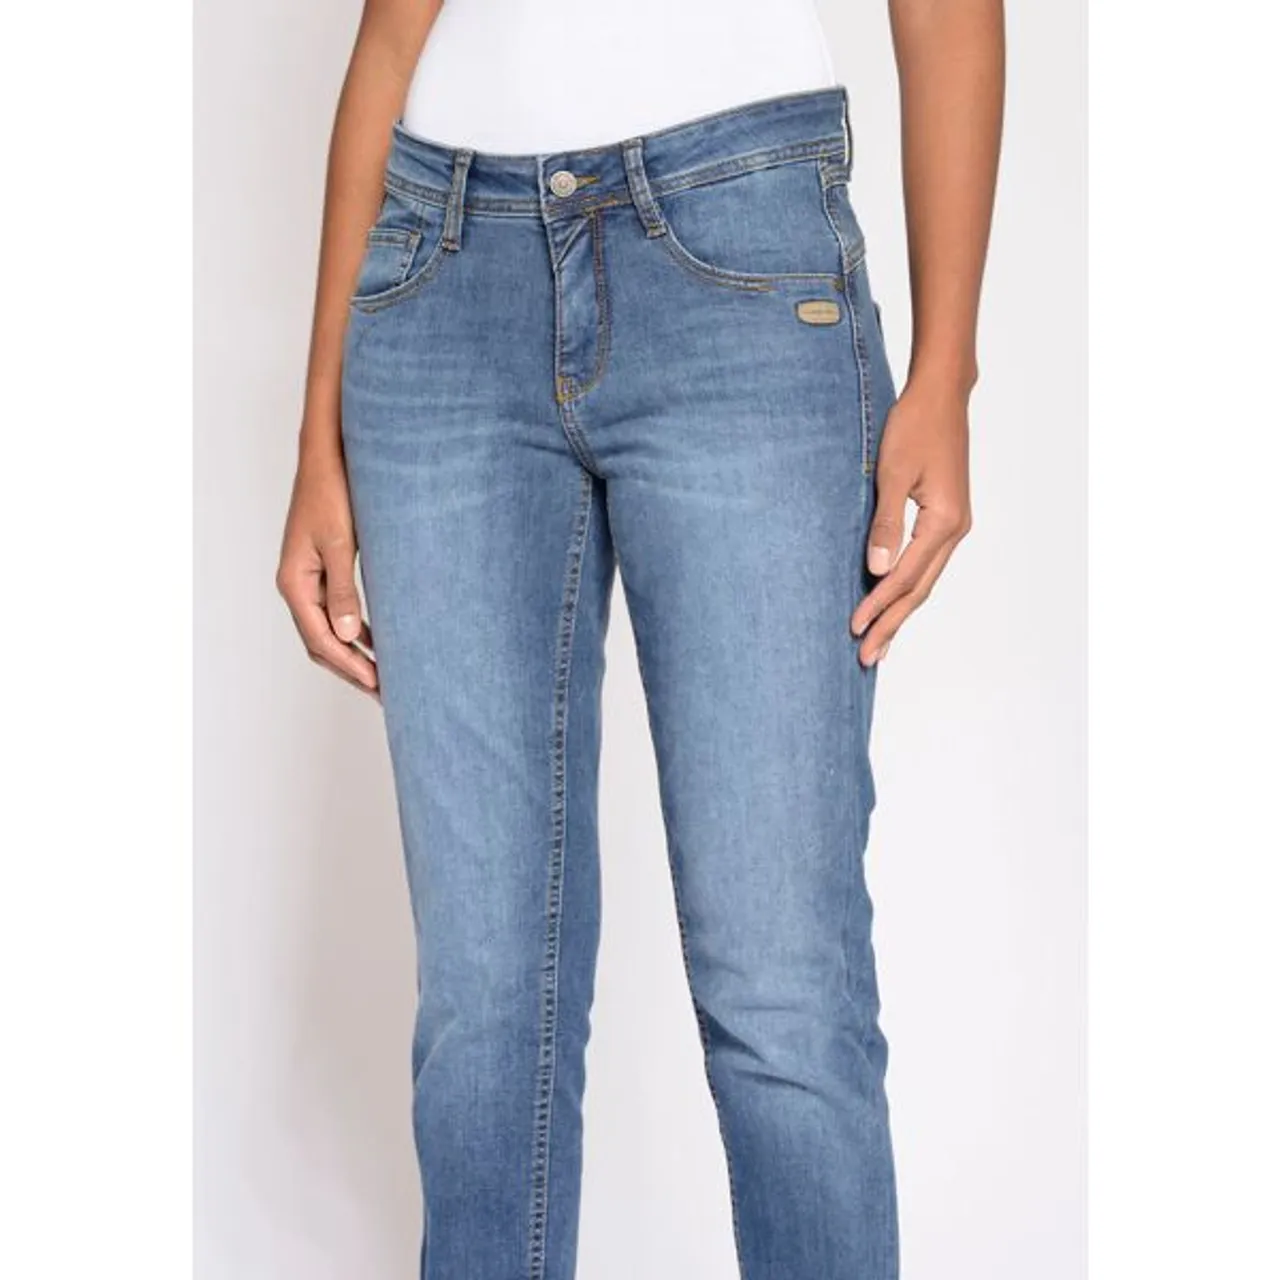 Relax-fit-Jeans GANG "94AMELIE" Gr. 26 (34), N-Gr, blau (universal class wash) Damen Jeans Weite